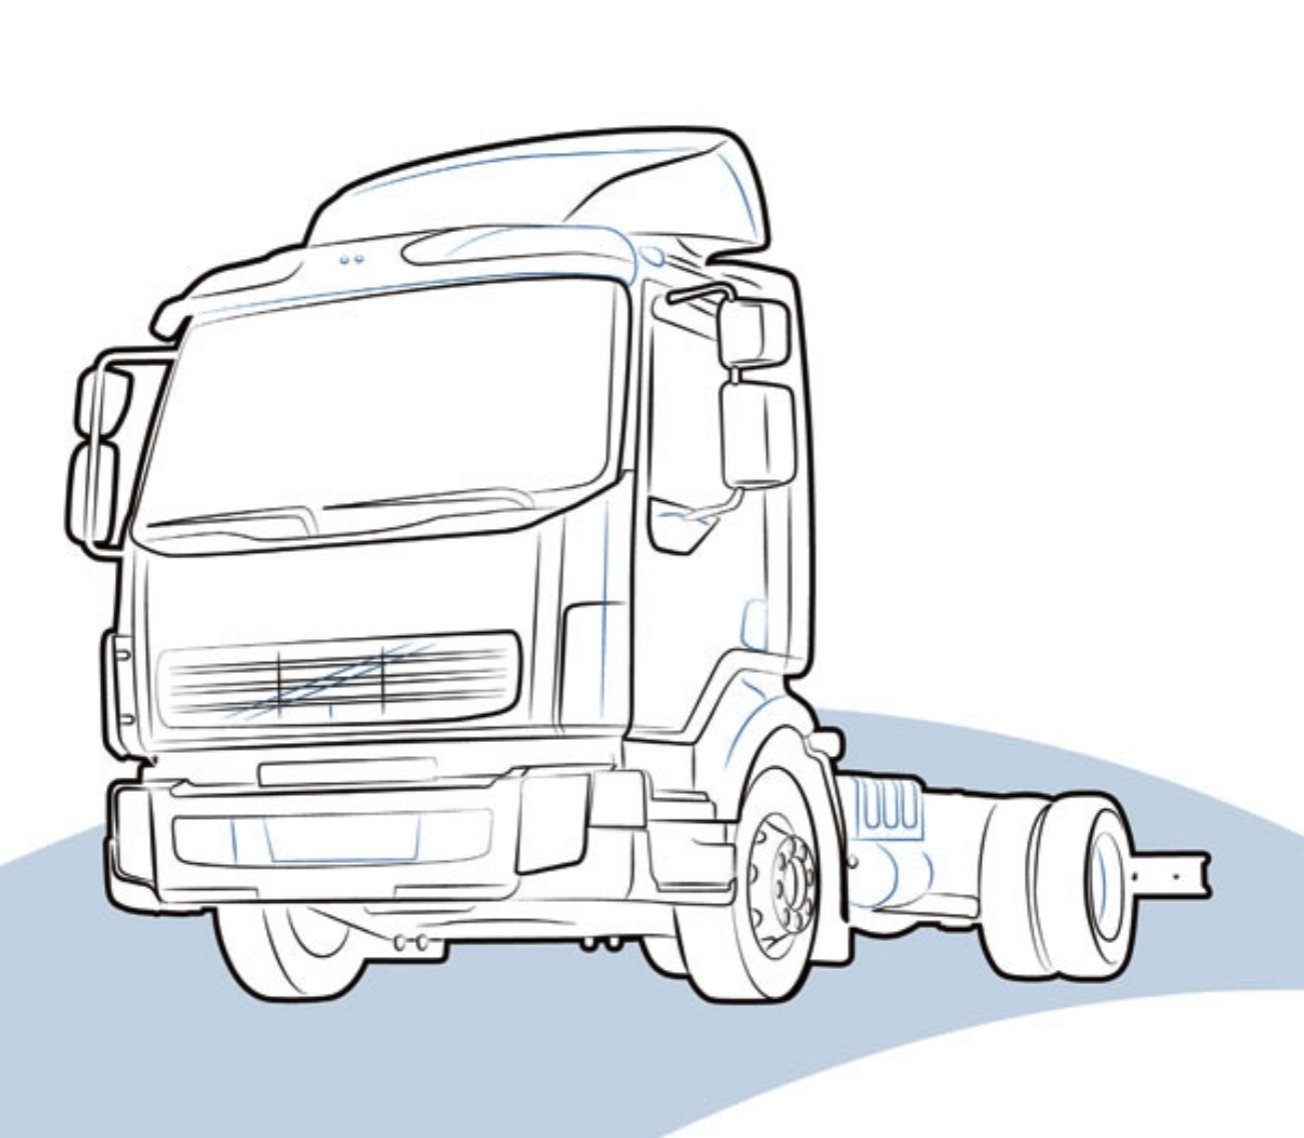 SUPPORTO PARAURTI DX DAF LF - 1401819 - Carrozzeria Truck